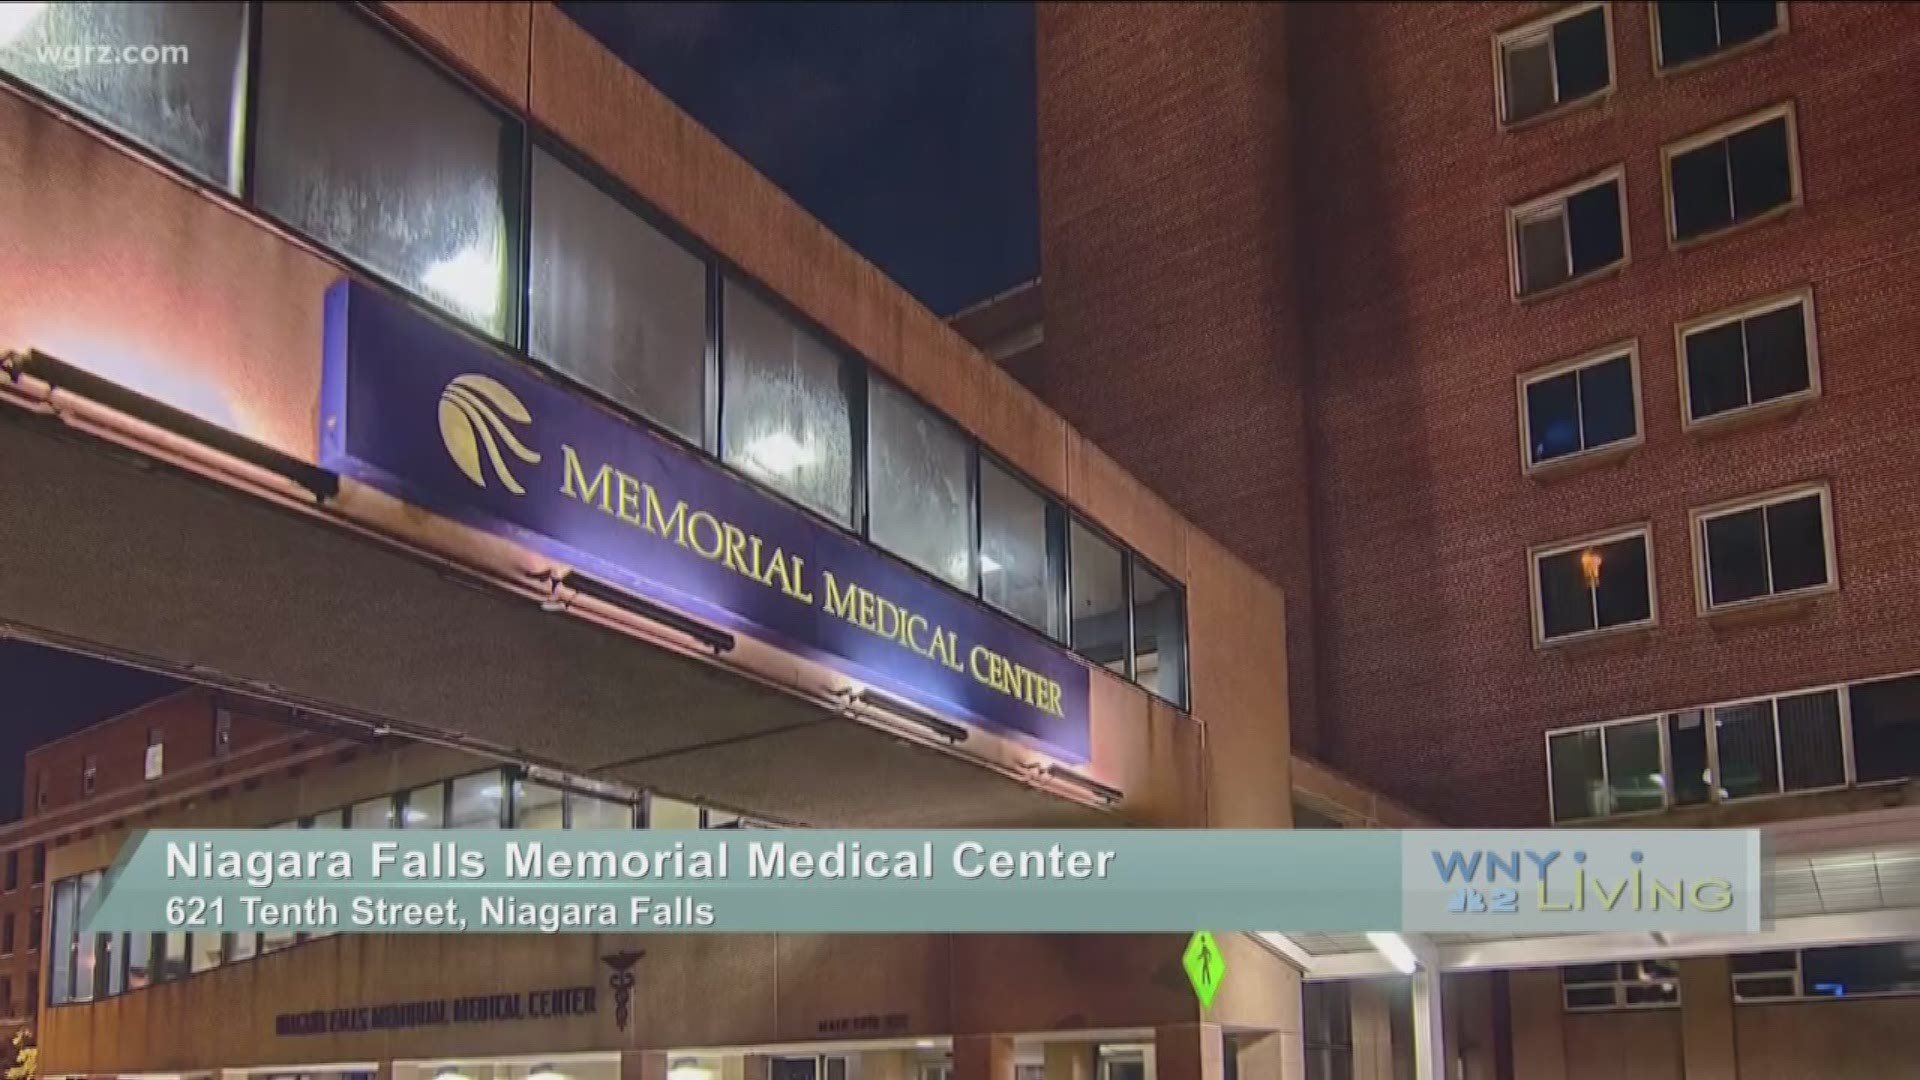 WNY Living - May 25 - Niagara Falls Memorial Medical Center (SPONSORED CONTENT)